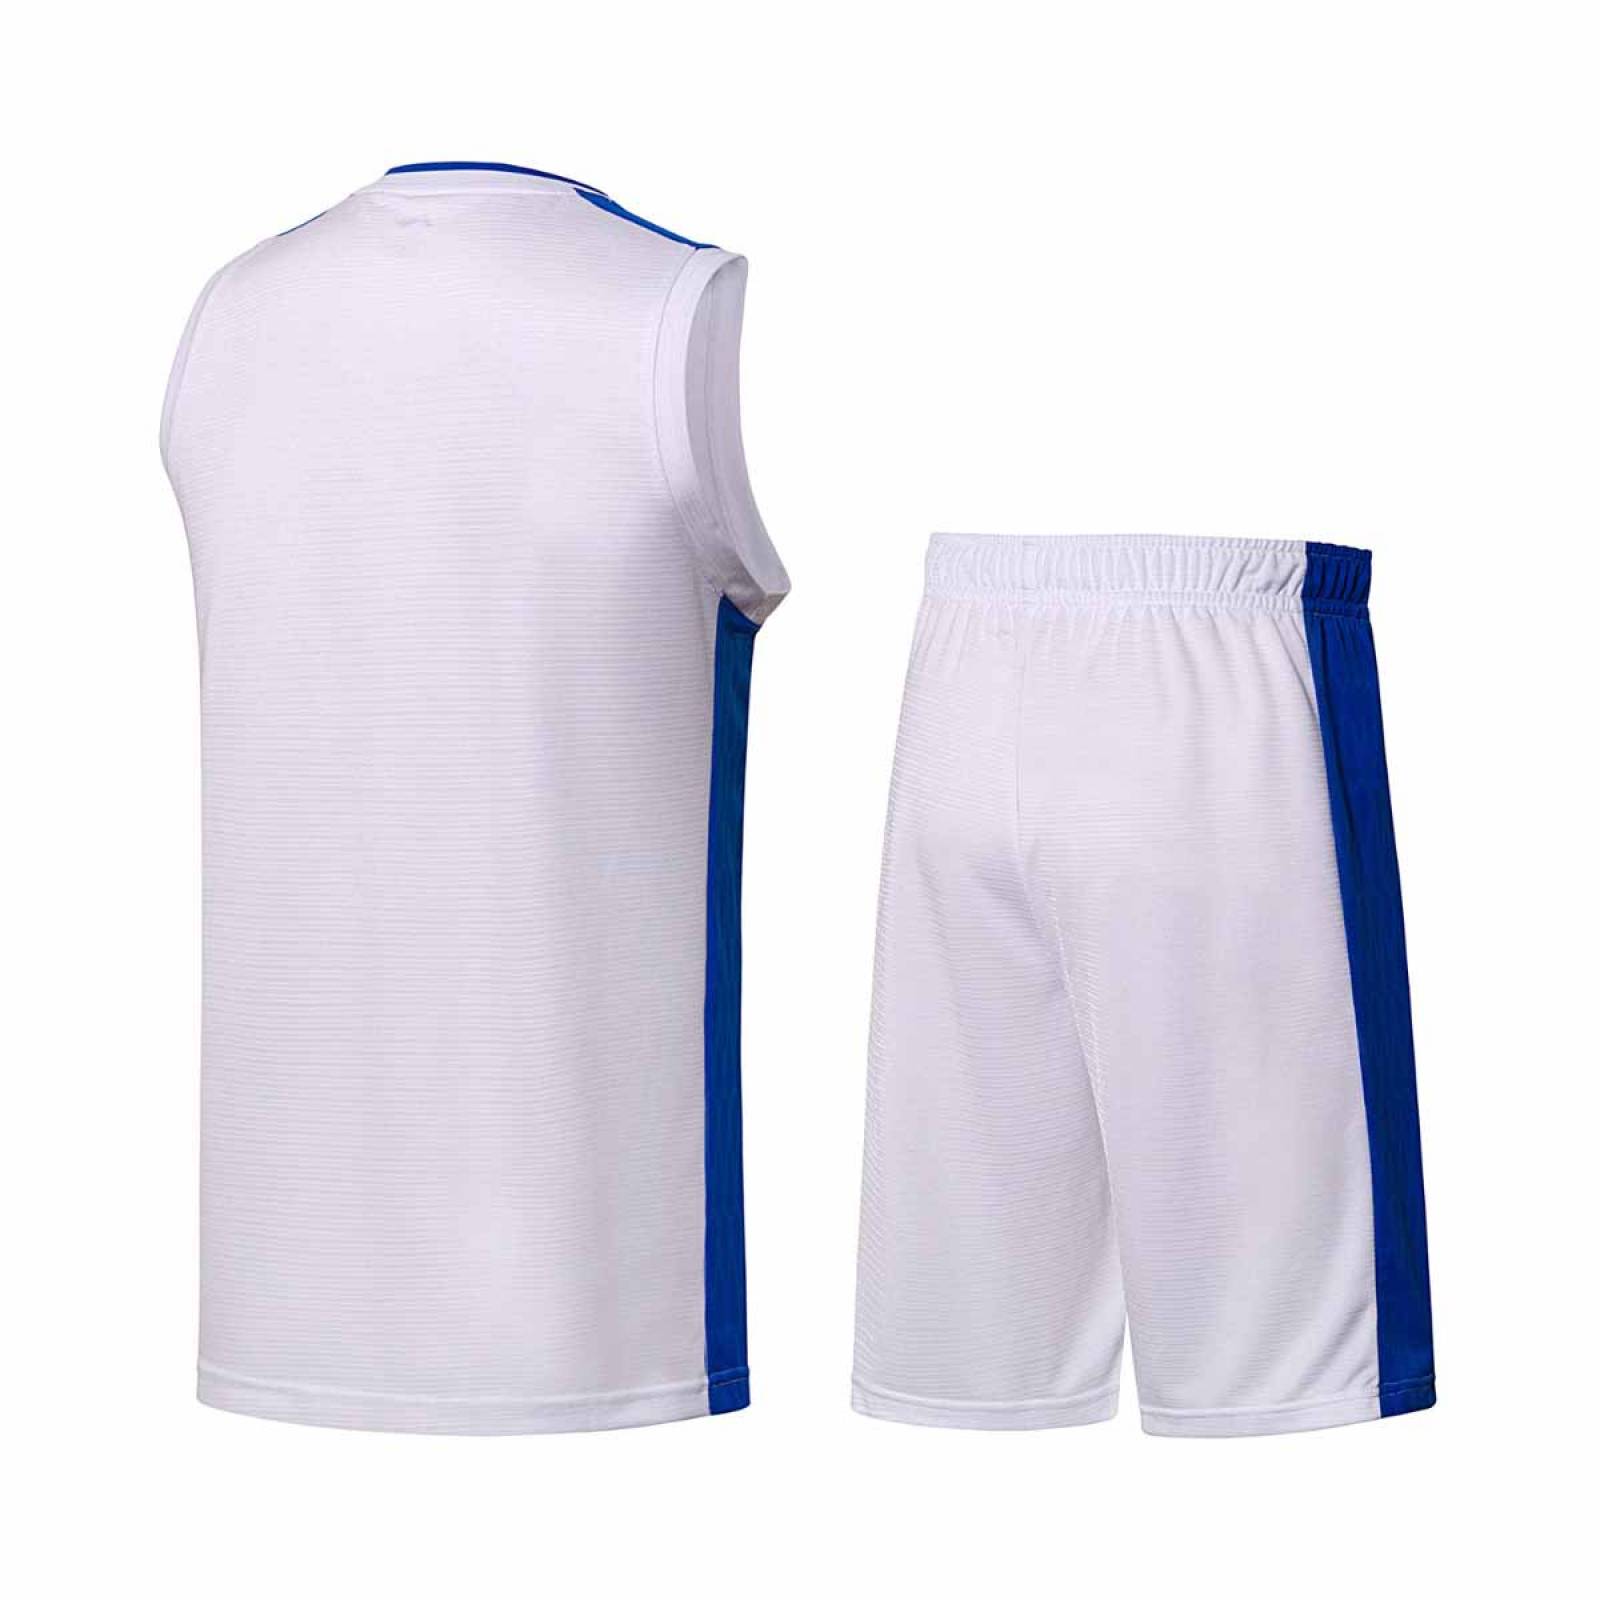 Conjunto de Playera y Shorts para Basketball AATN005-1 Blanco Li-Ning Caballero